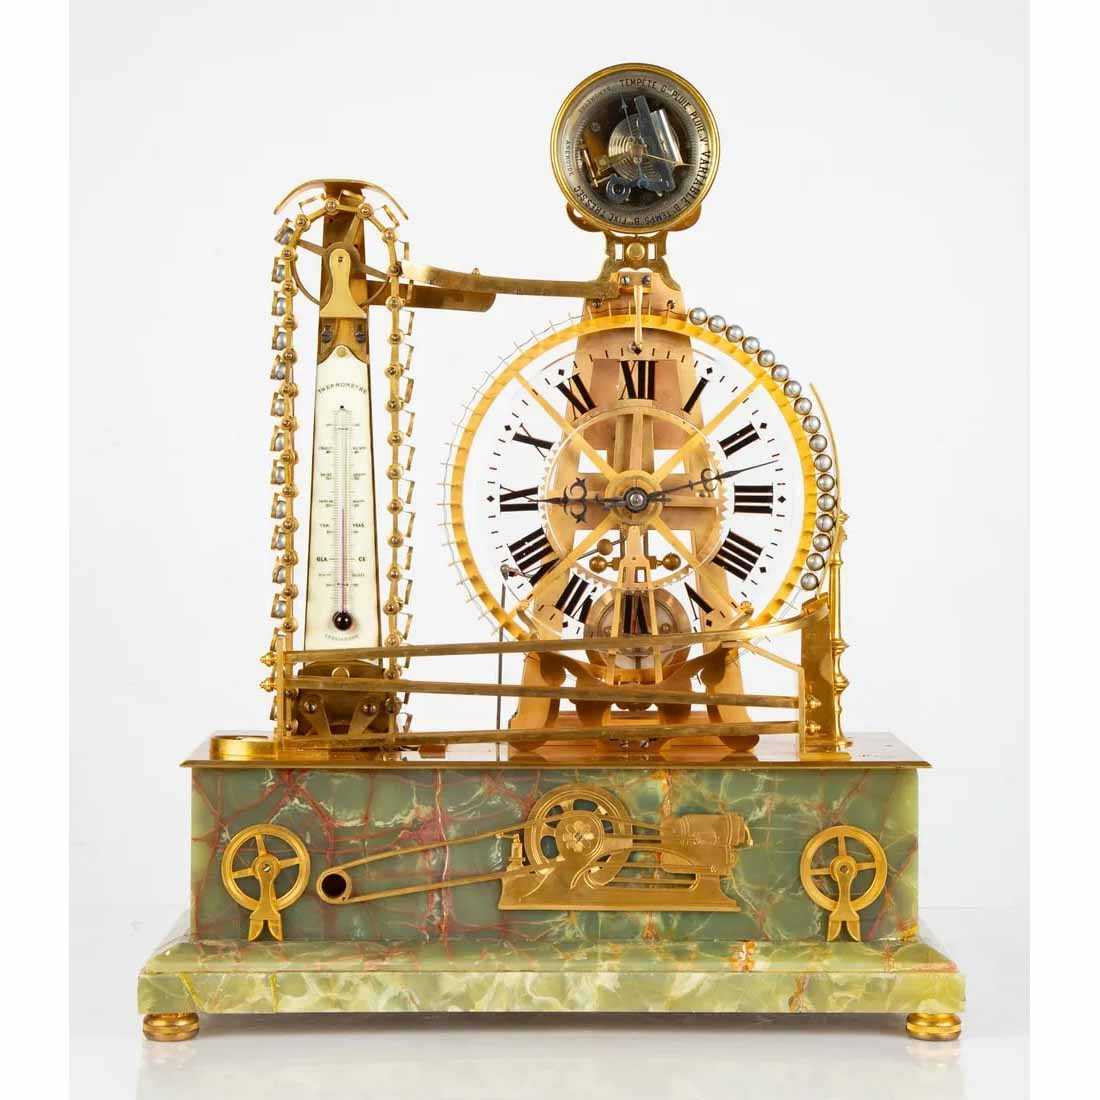 Circa-1900 water wheel novelty clock featured at Cottone May 30-31